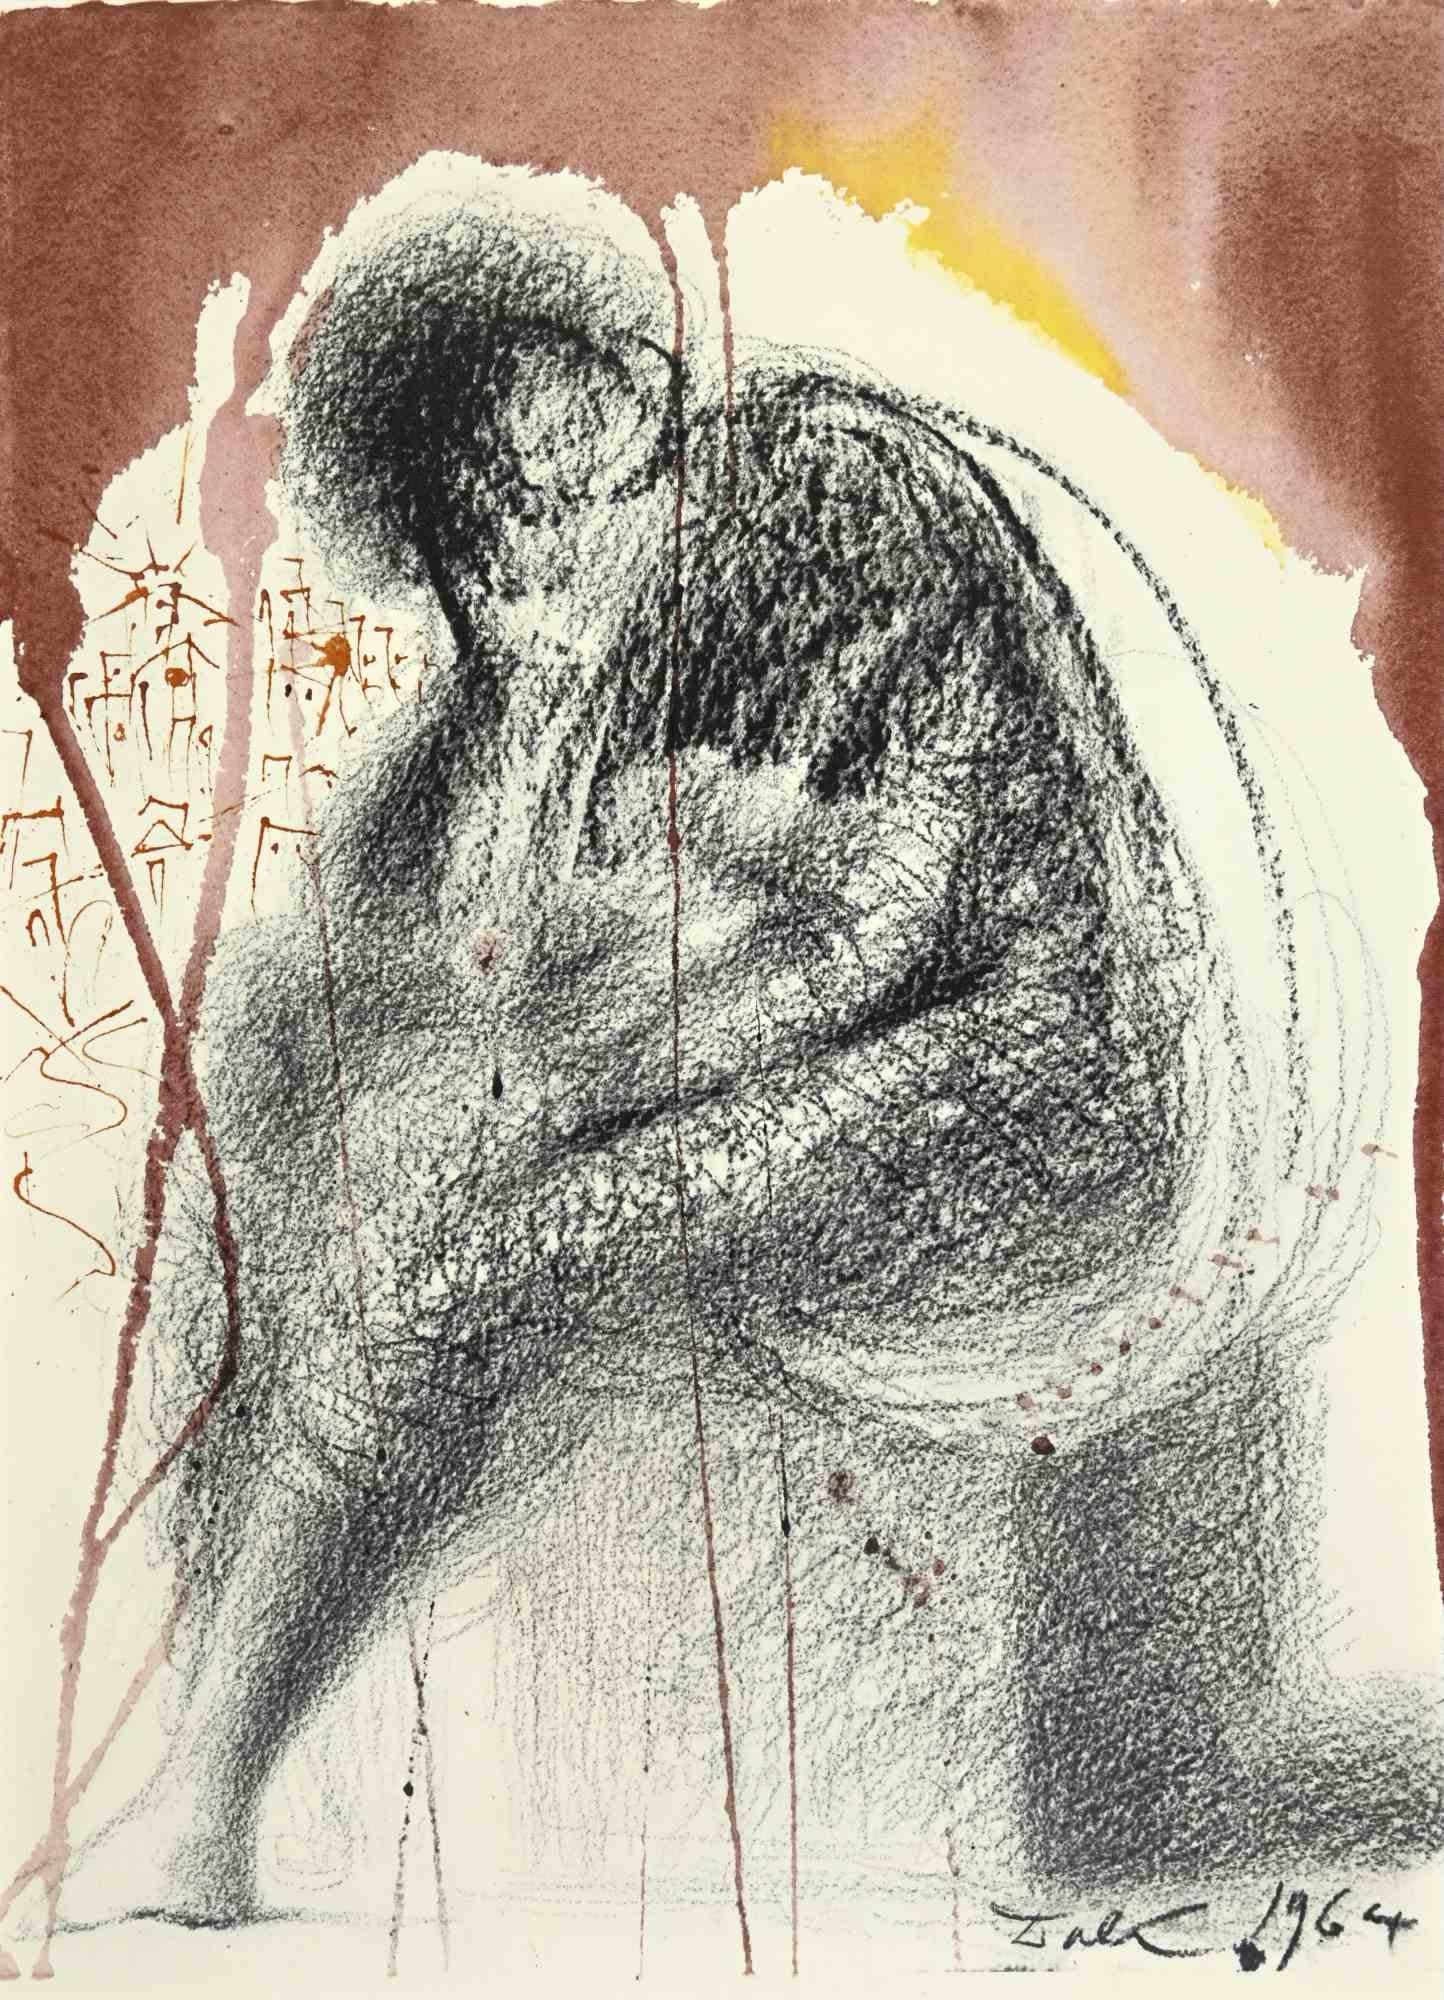 Salvador Dalí Print - Sedet Sola Civitas Plena Populo - Lithograph - 1964